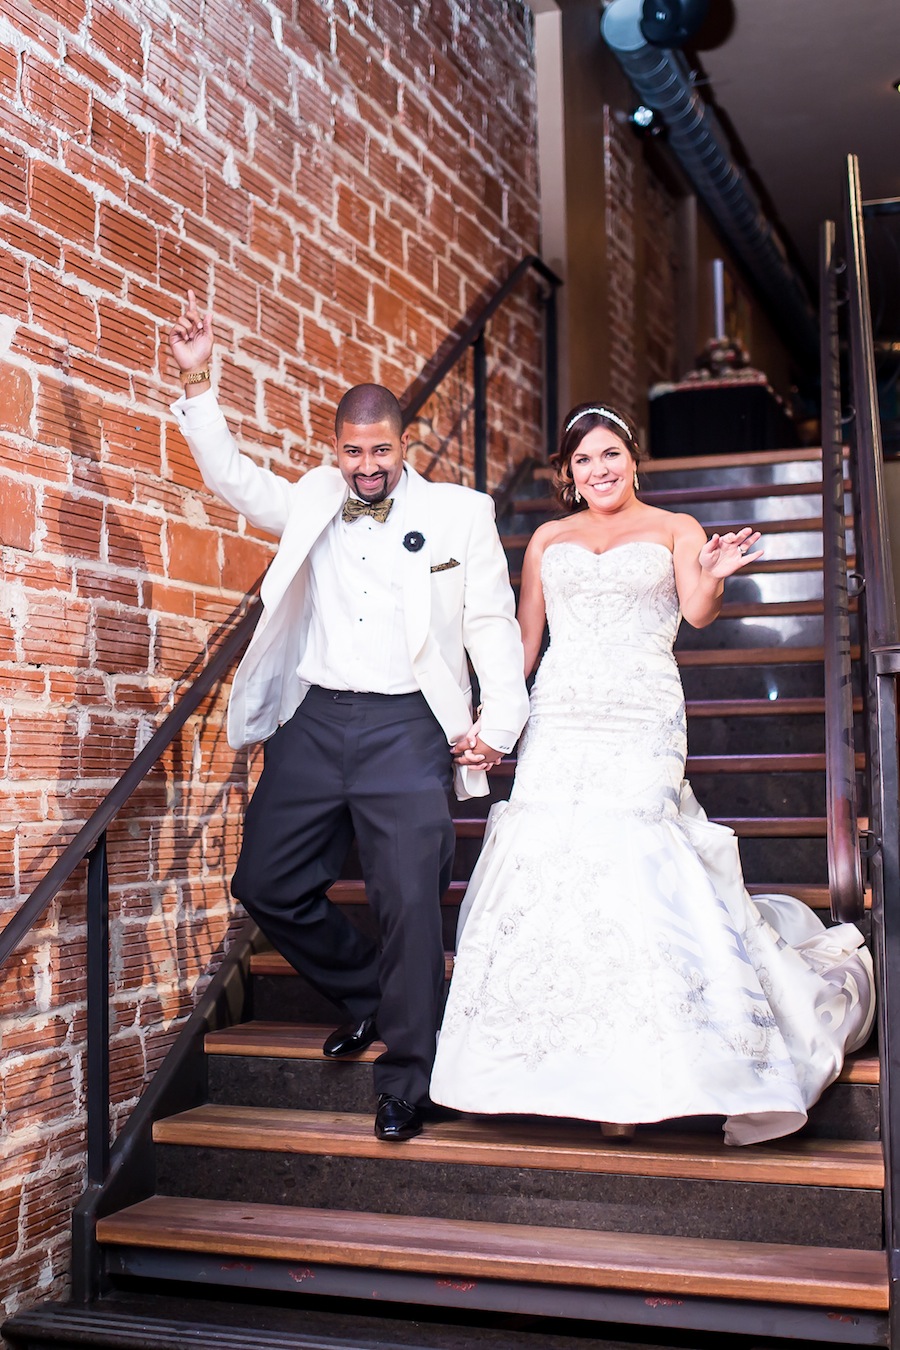 NOVA 535 Bride and Groom Wedding Entrance Walking Down Staircase